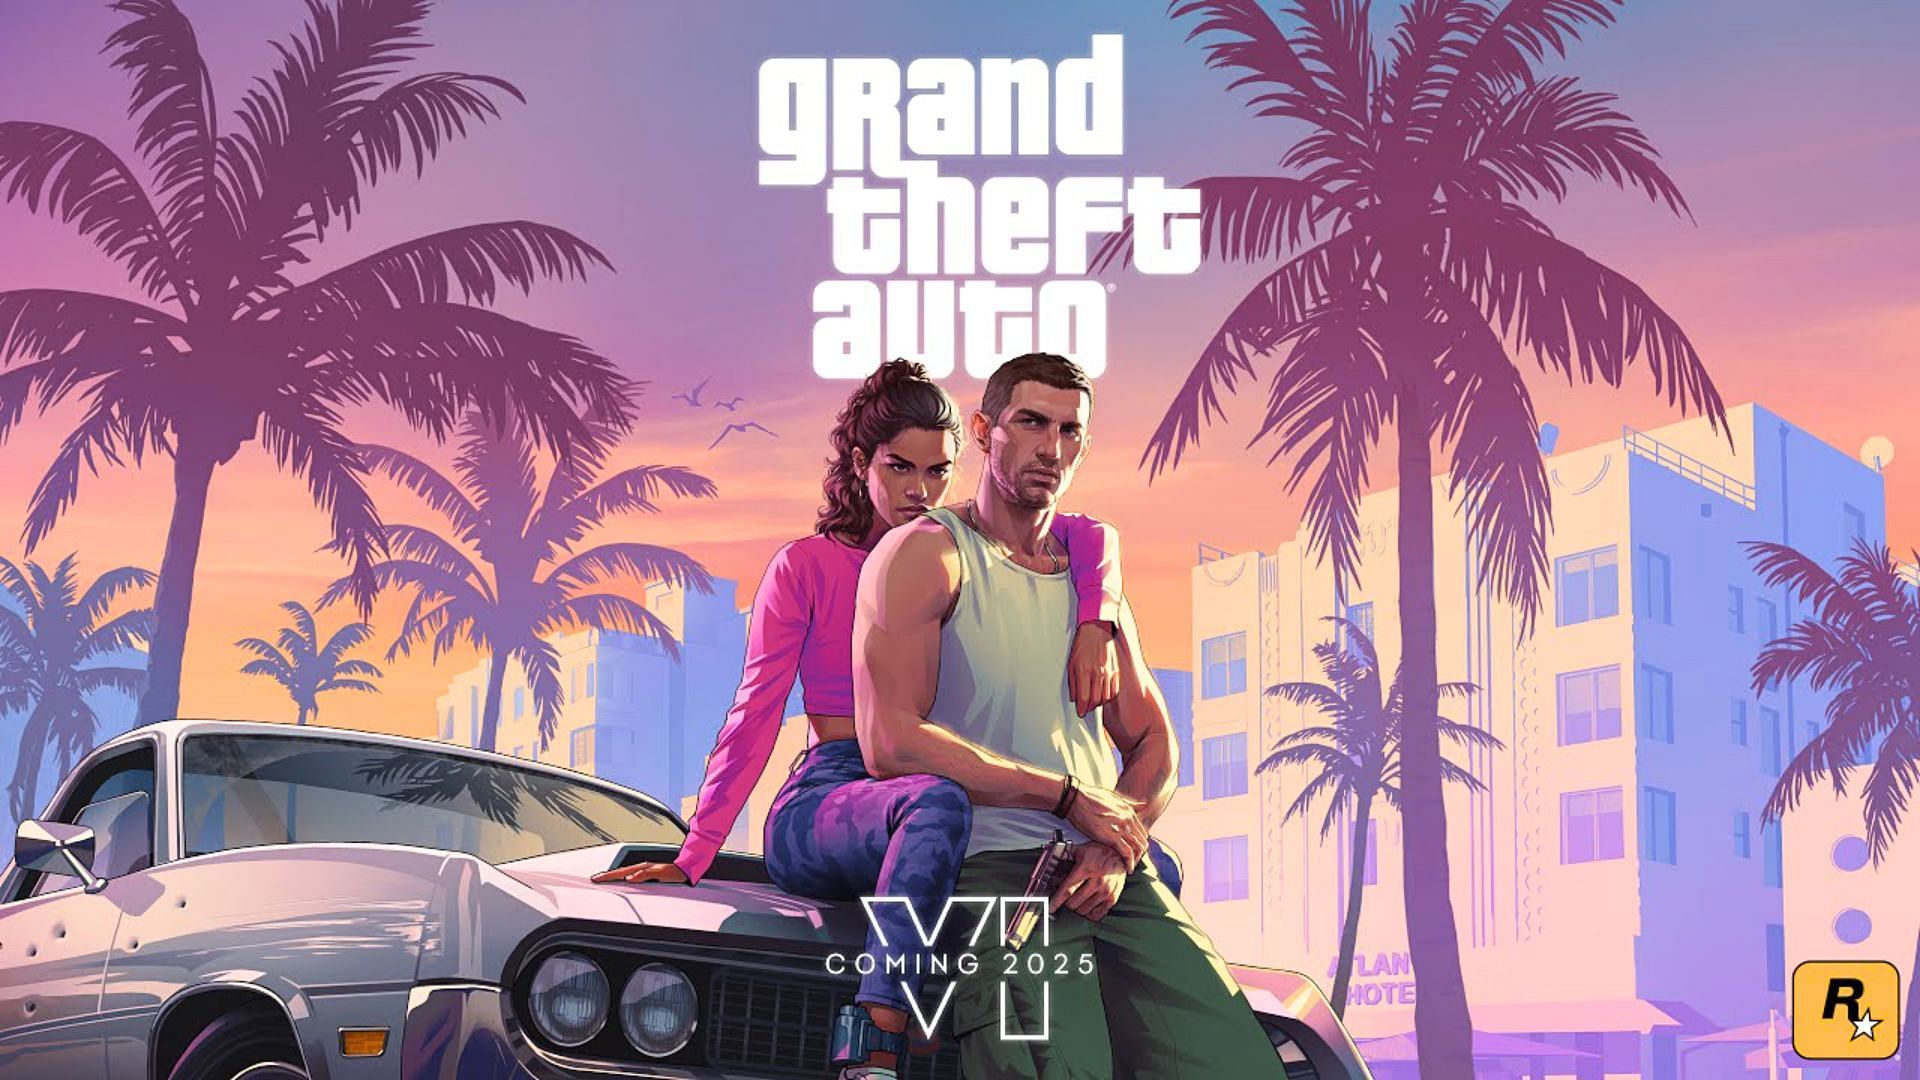 The official Grand Theft Auto 6 cover art (Image via Rockstar Games)